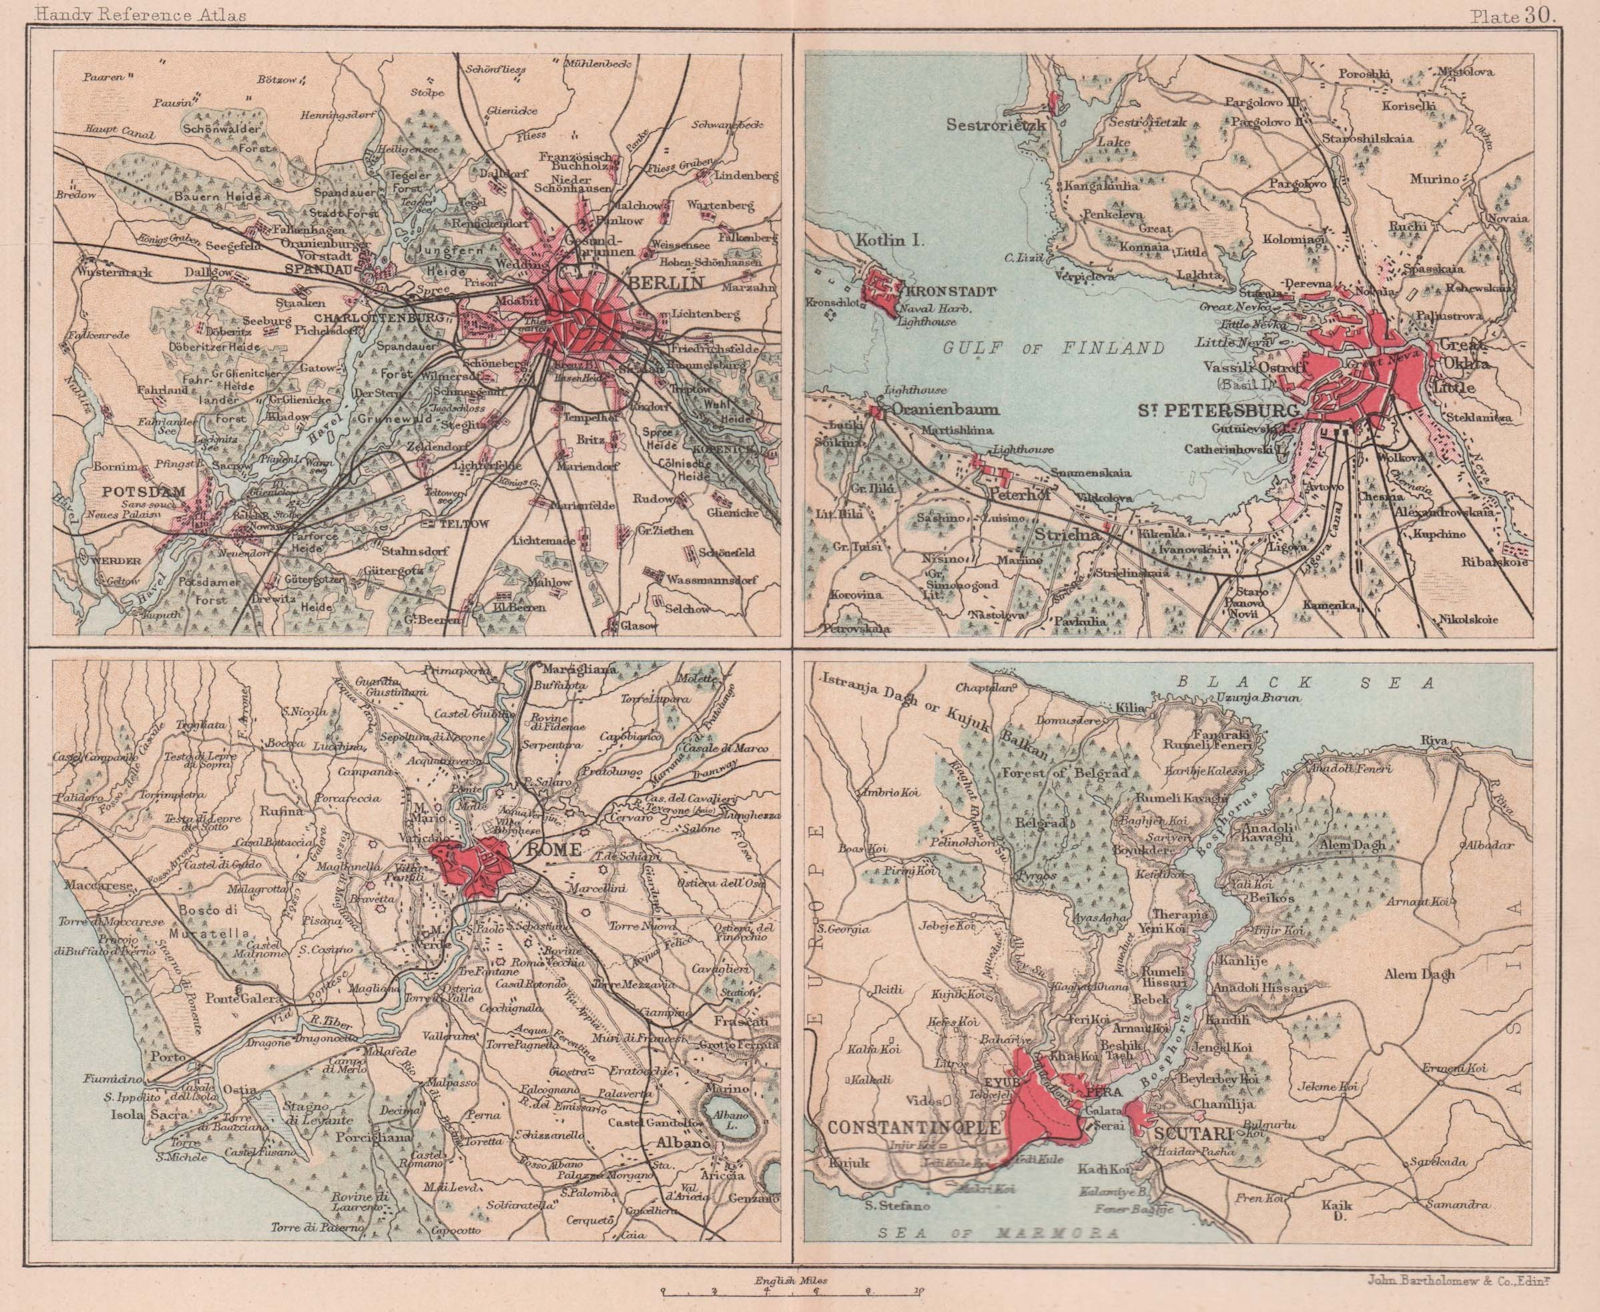 Associate Product Berlin Rome St. Petersburg Constantinople environs. BARTHOLOMEW 1893 old map